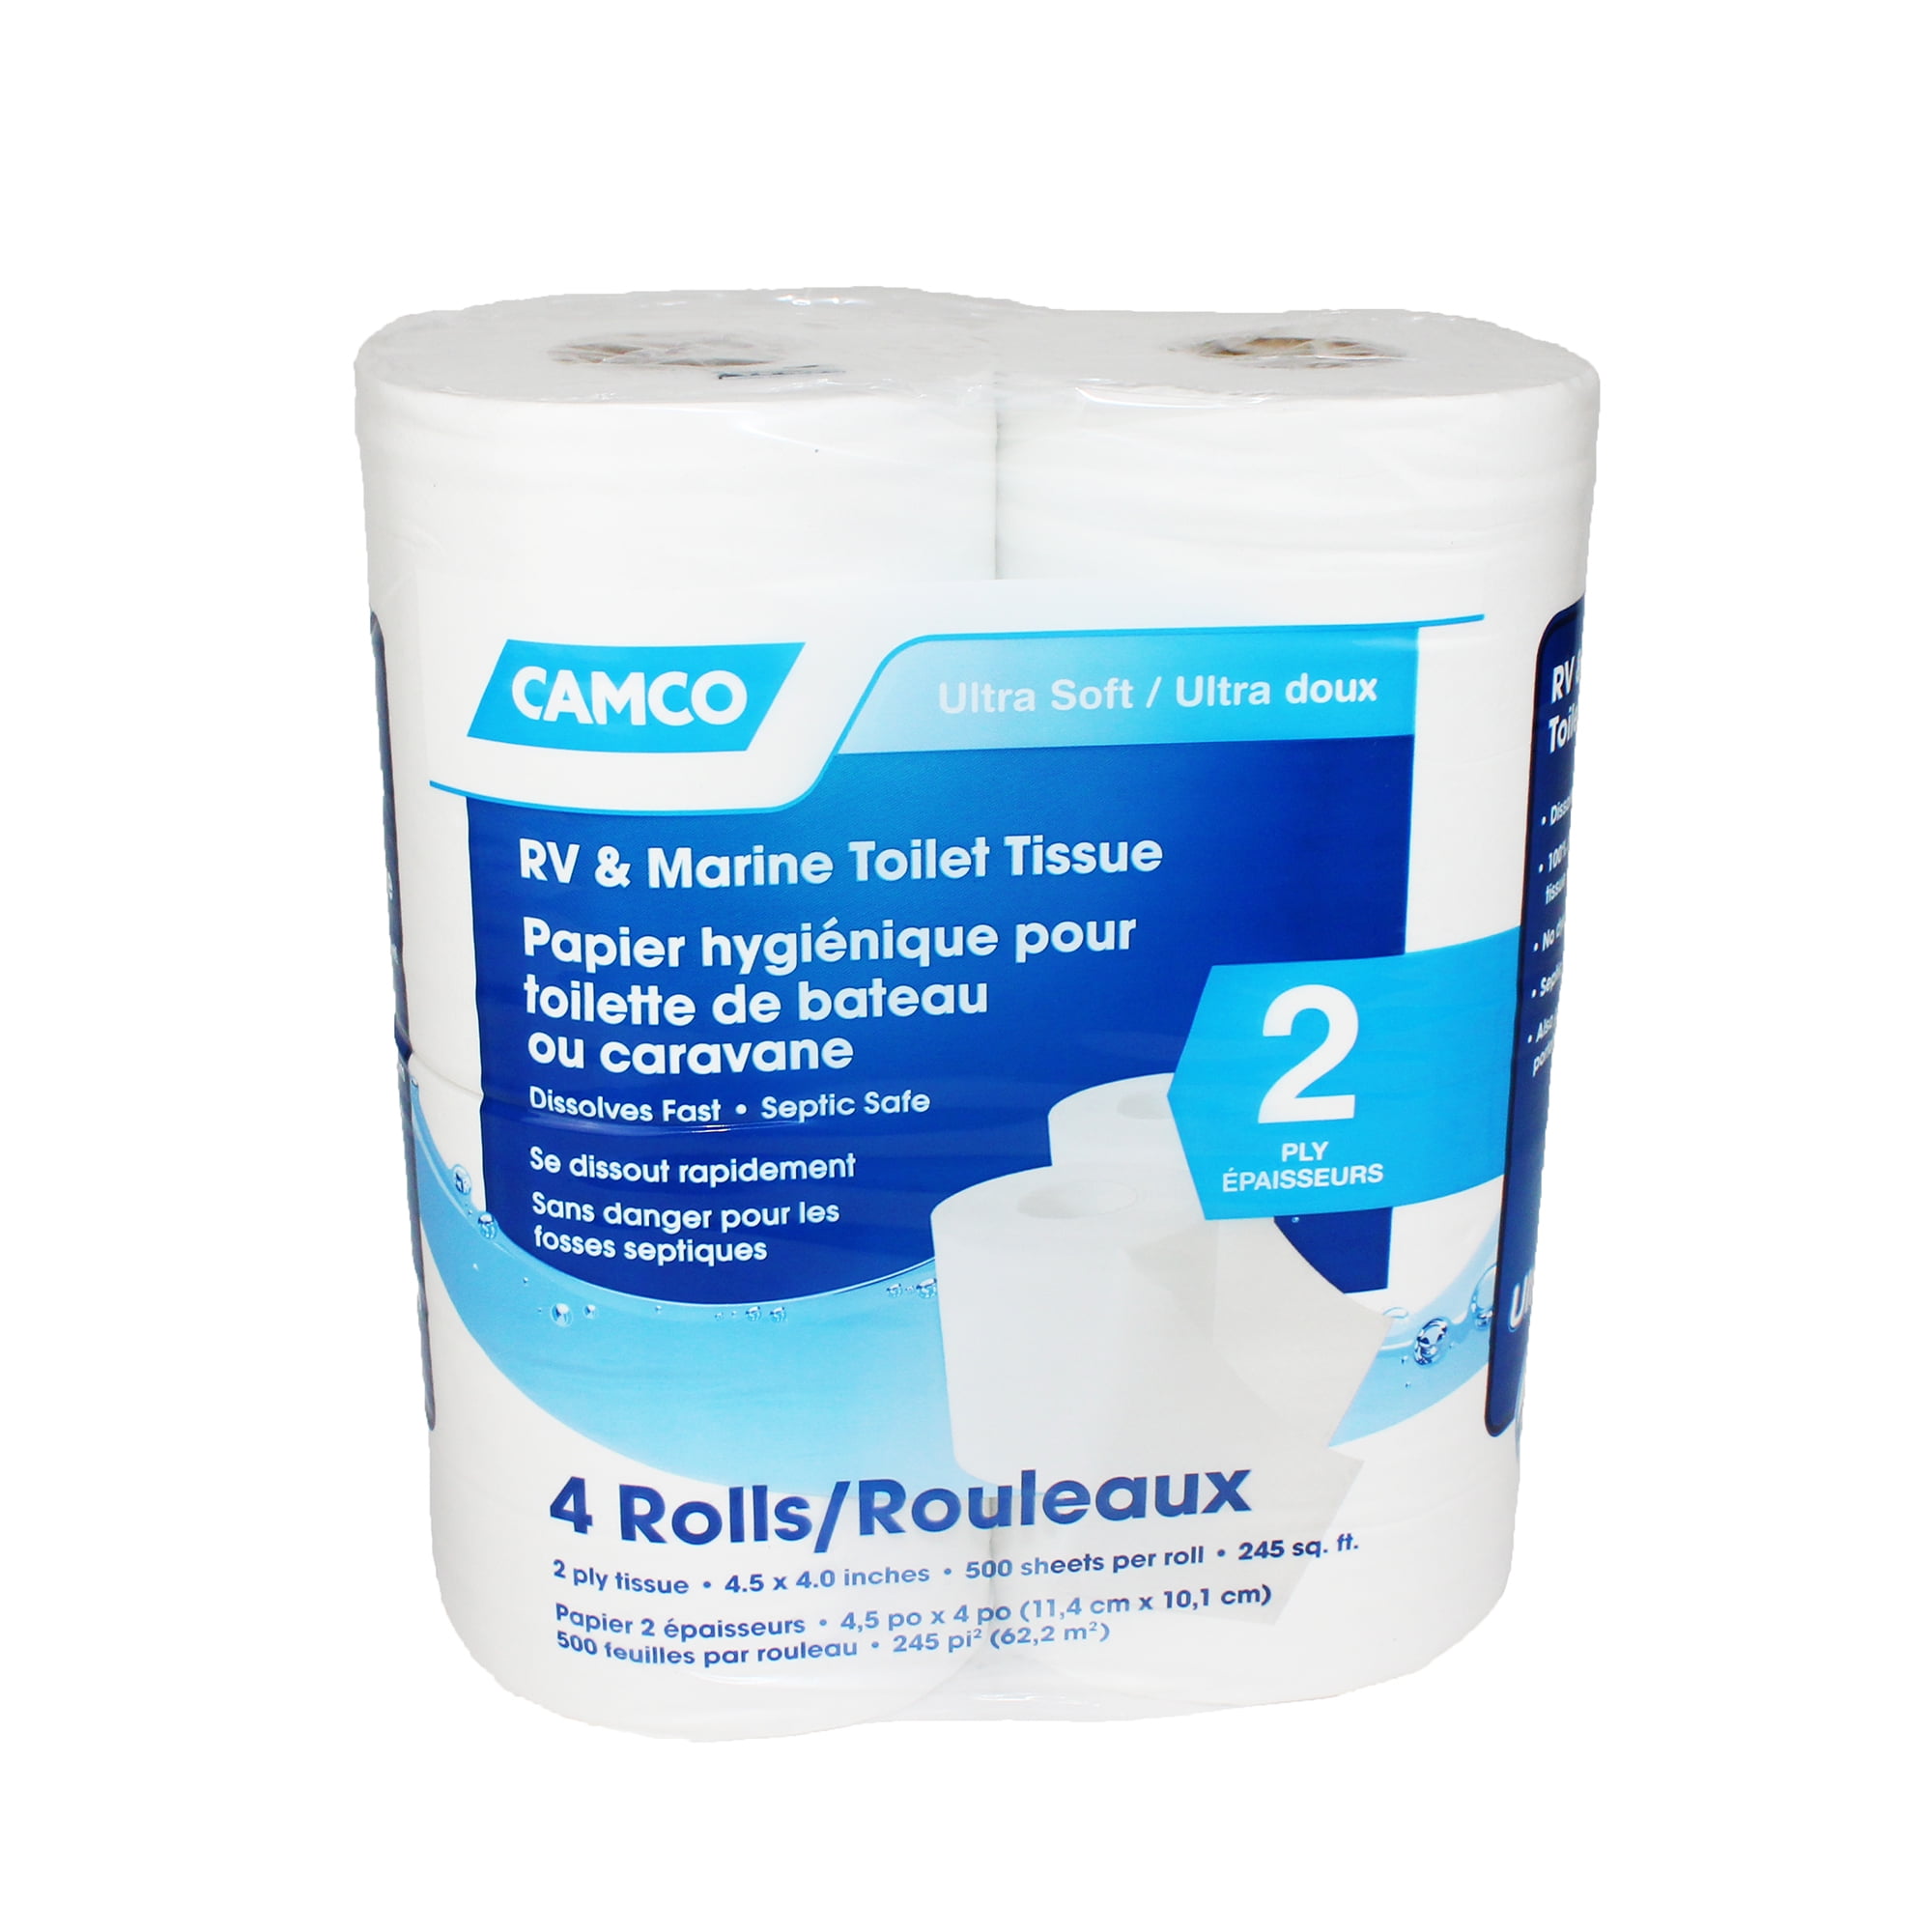 8 Details about   Scott Rapid-Dissolving Toilet Paper 48 Bath Tissue Rolls for RV & Boats 24 